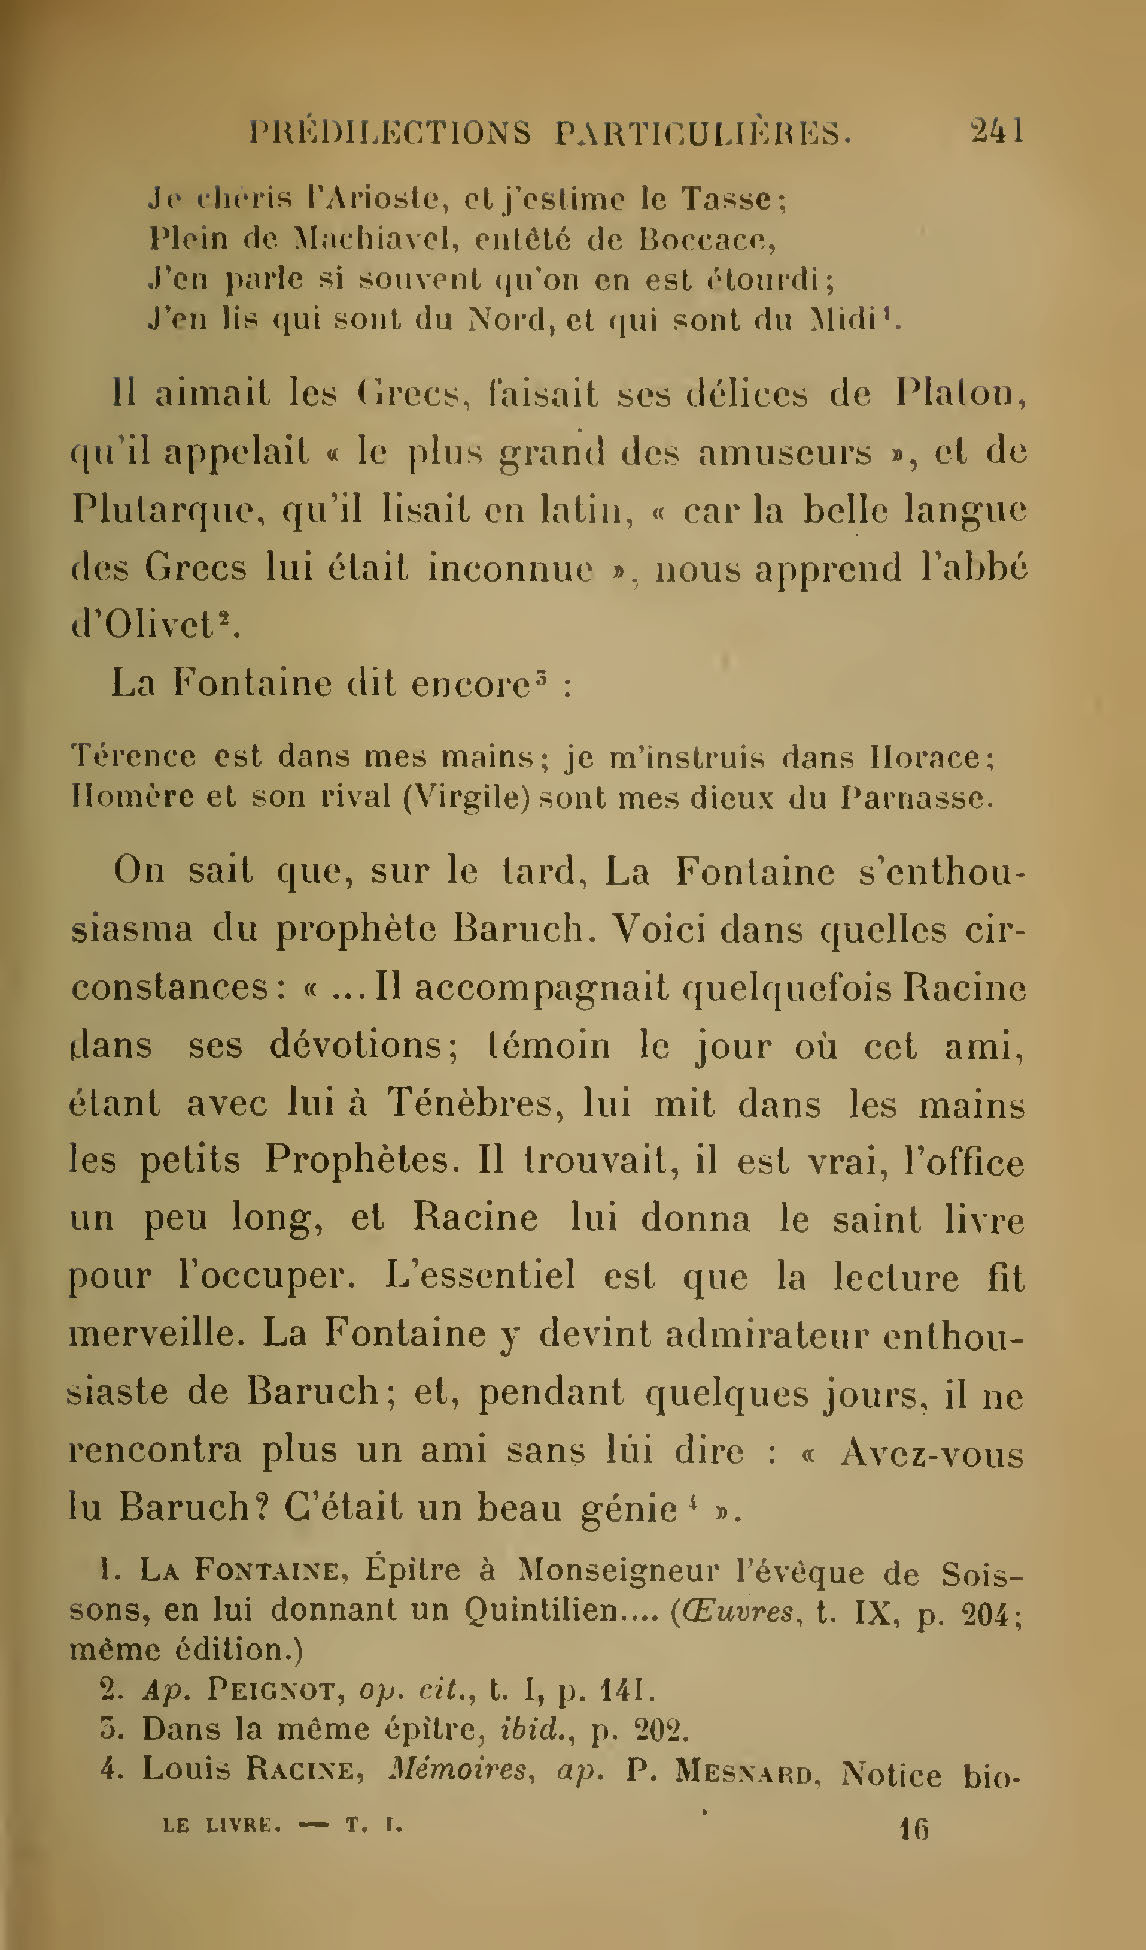 Albert Cim, Le Livre, t. I, p. 241.